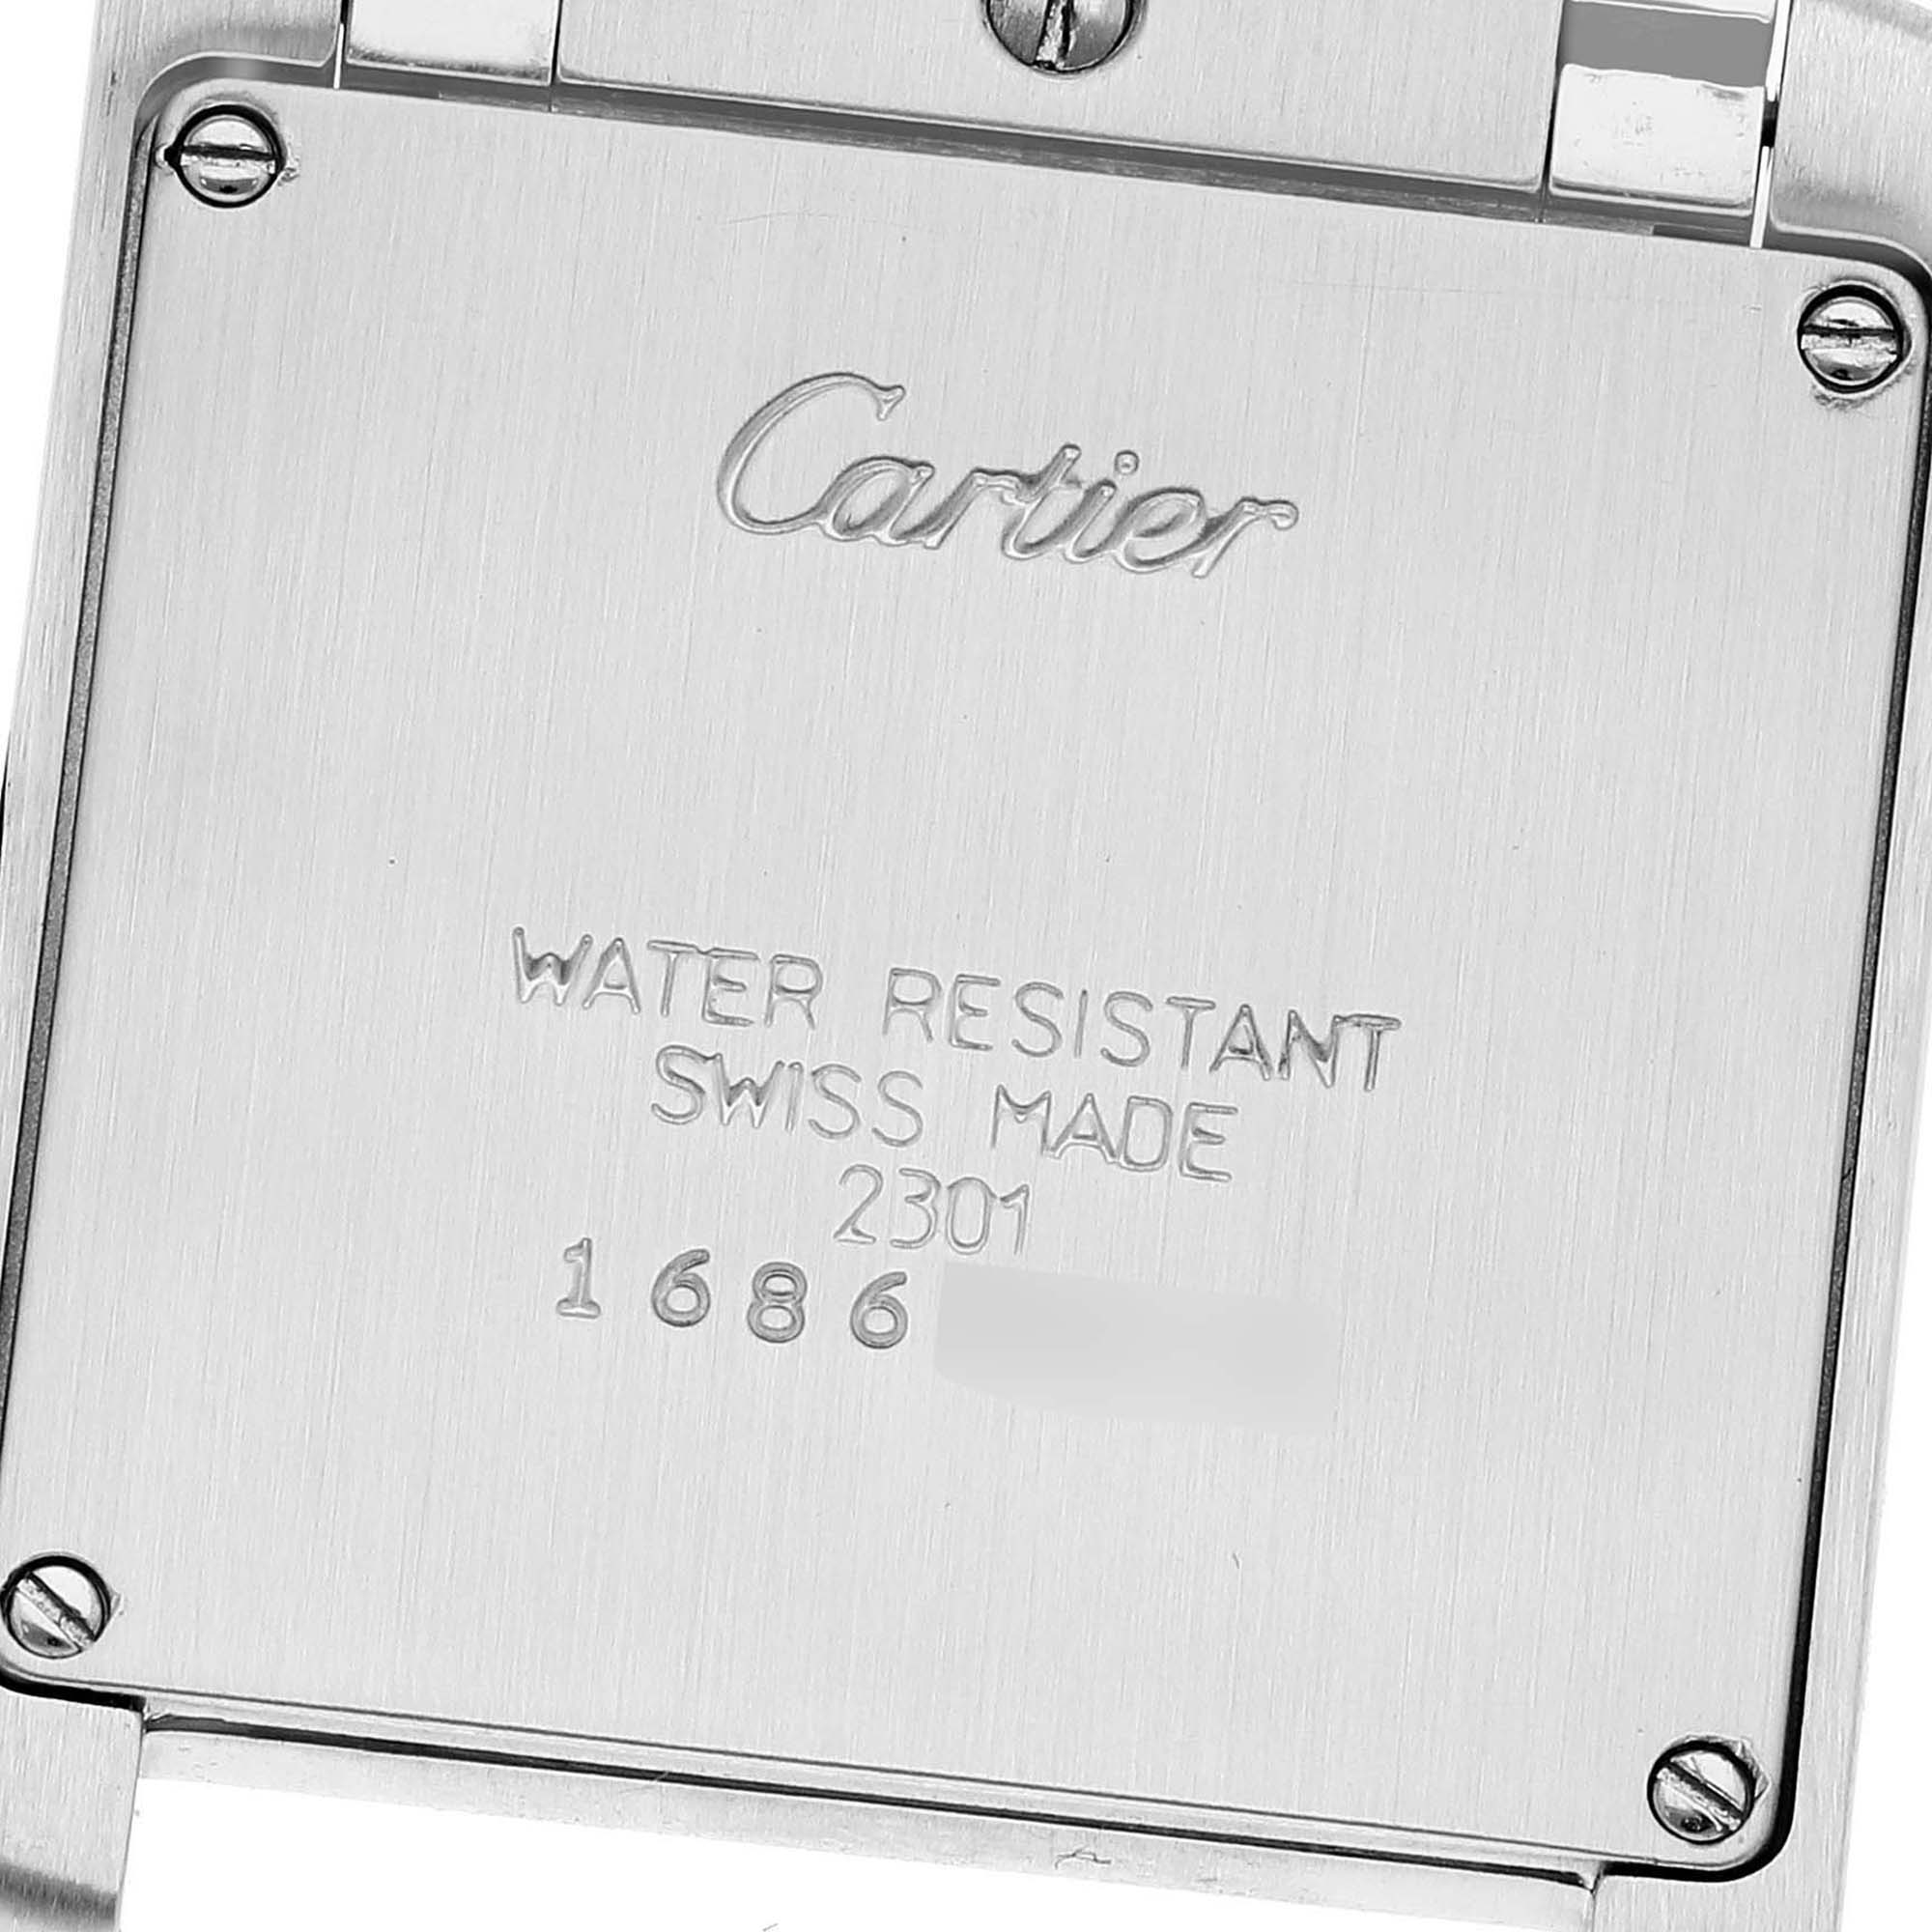 Cartier Tank Francaise Midsize Steel Ladies Watch WSTA0005 25 X 30 Mm